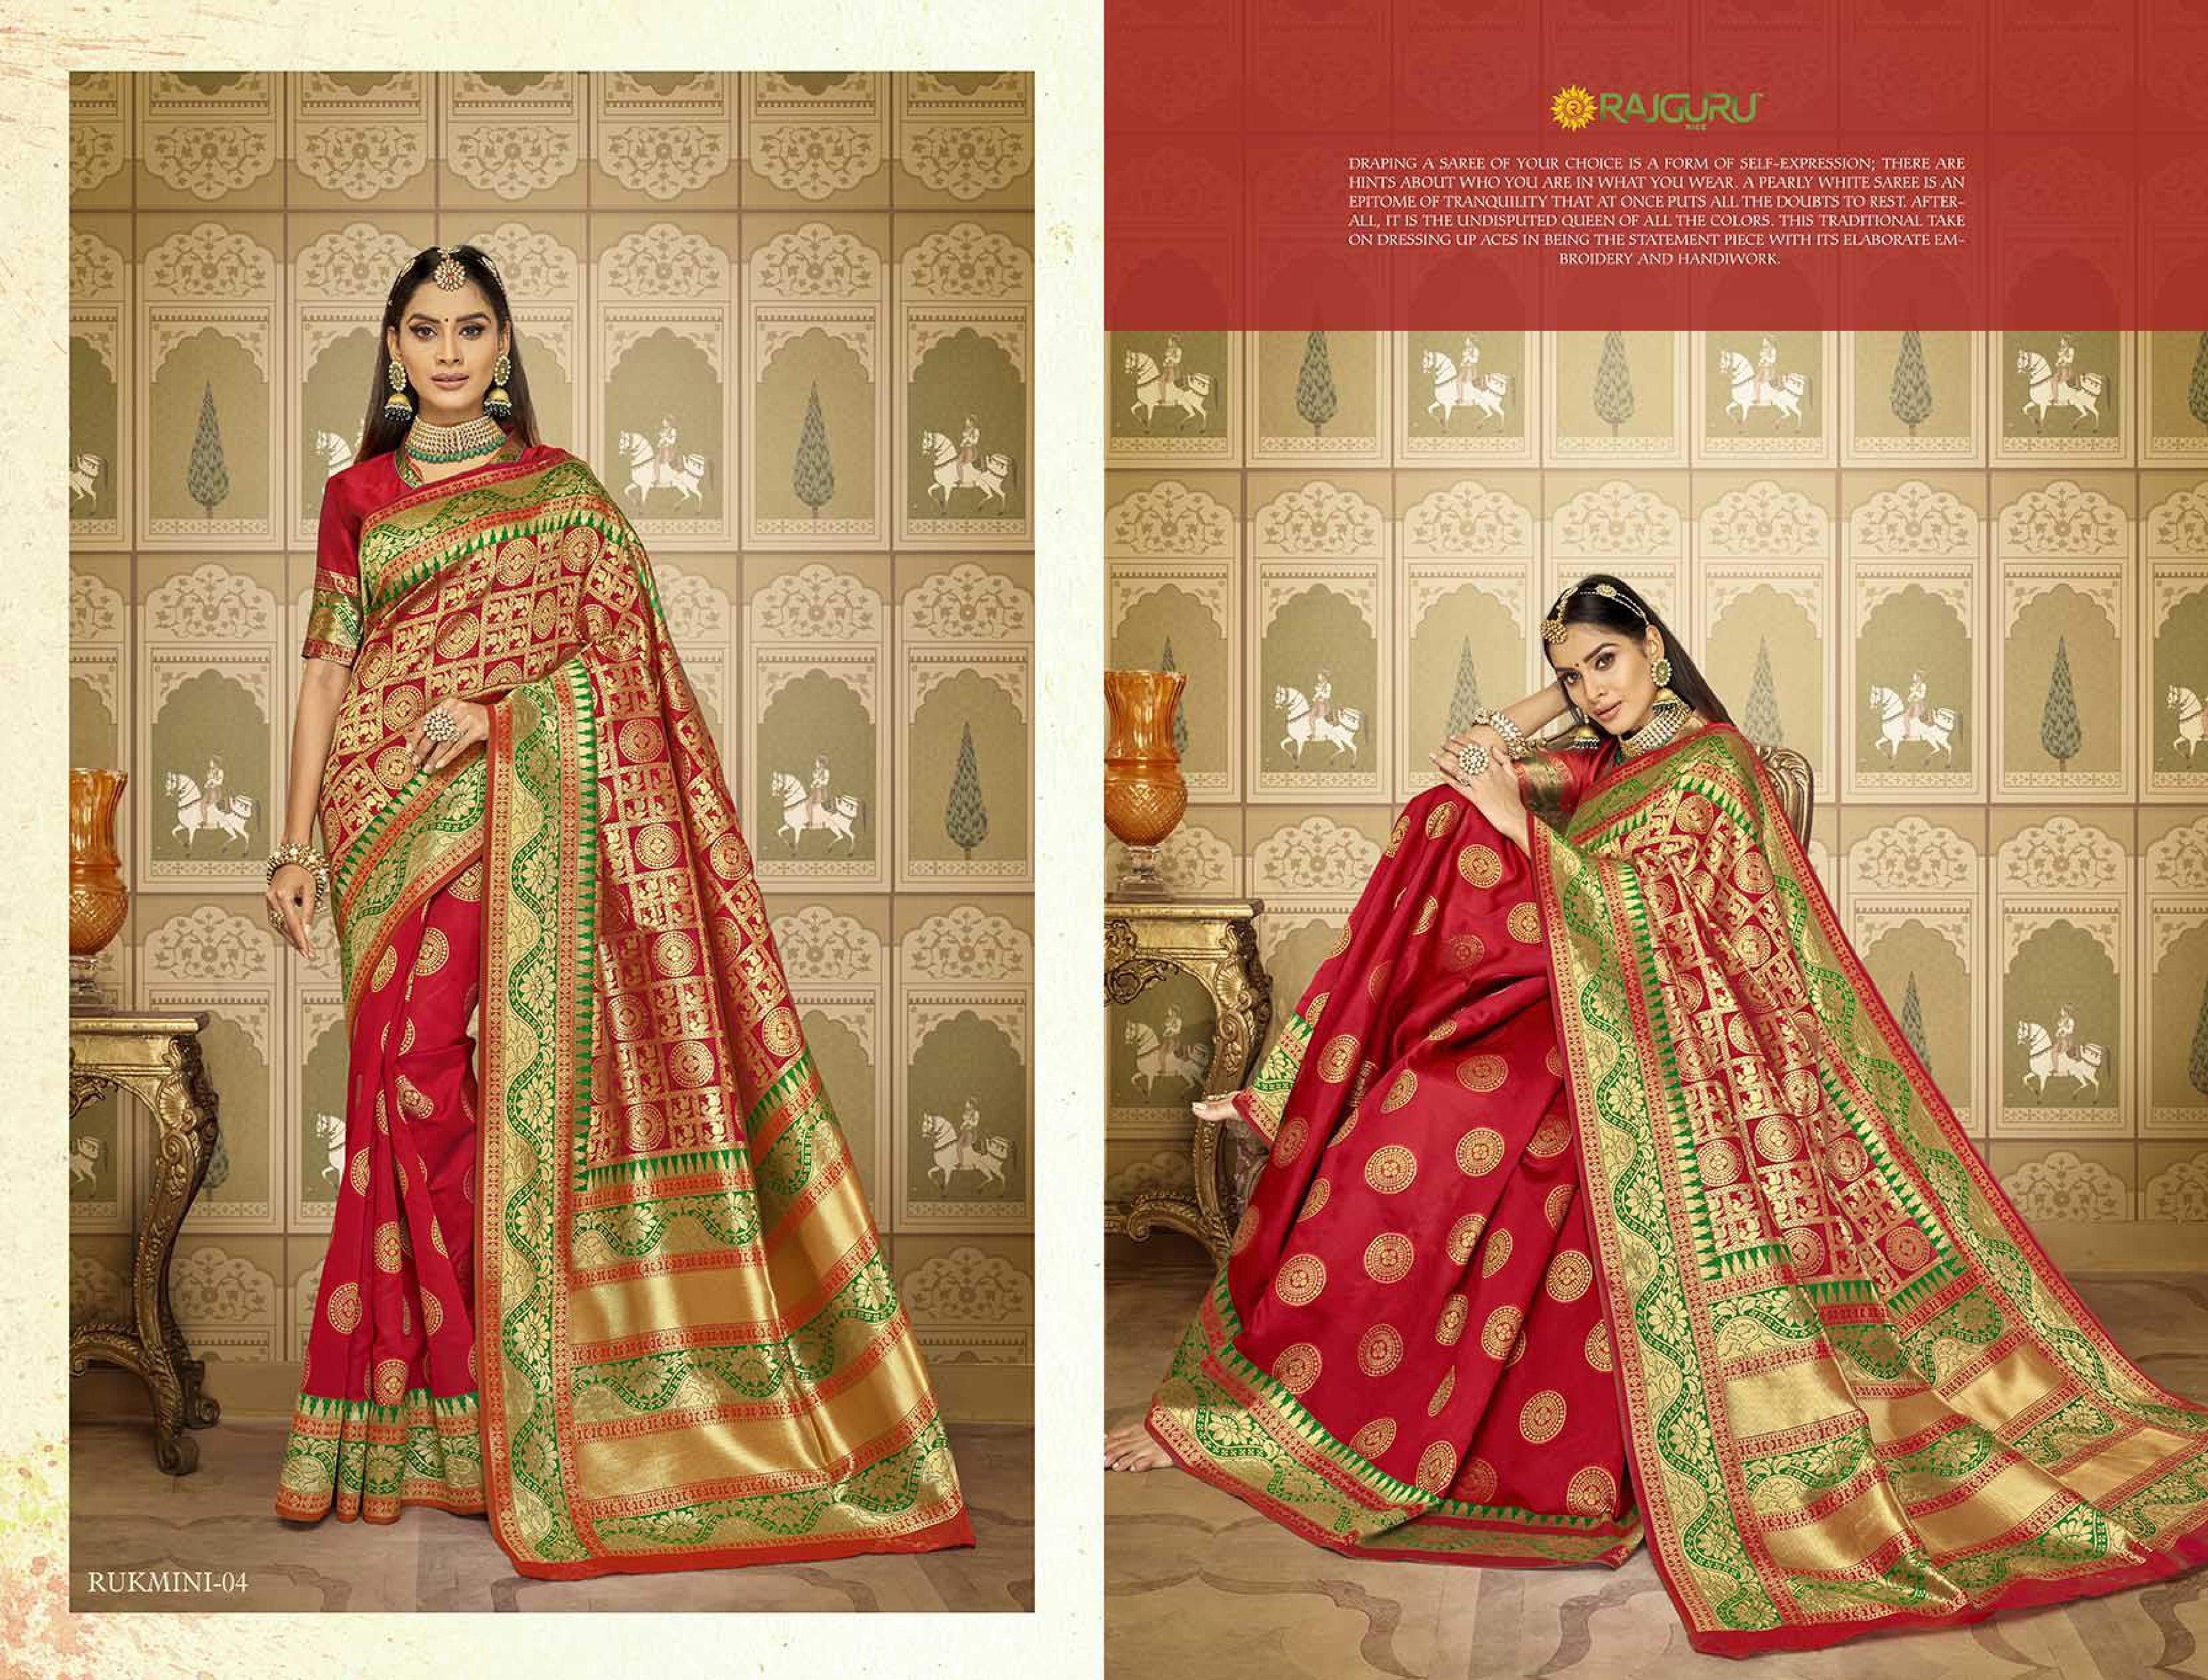 Rajguru Presents Rukmini Beautiful Latest Silk Sarees Catalog Wholesaler